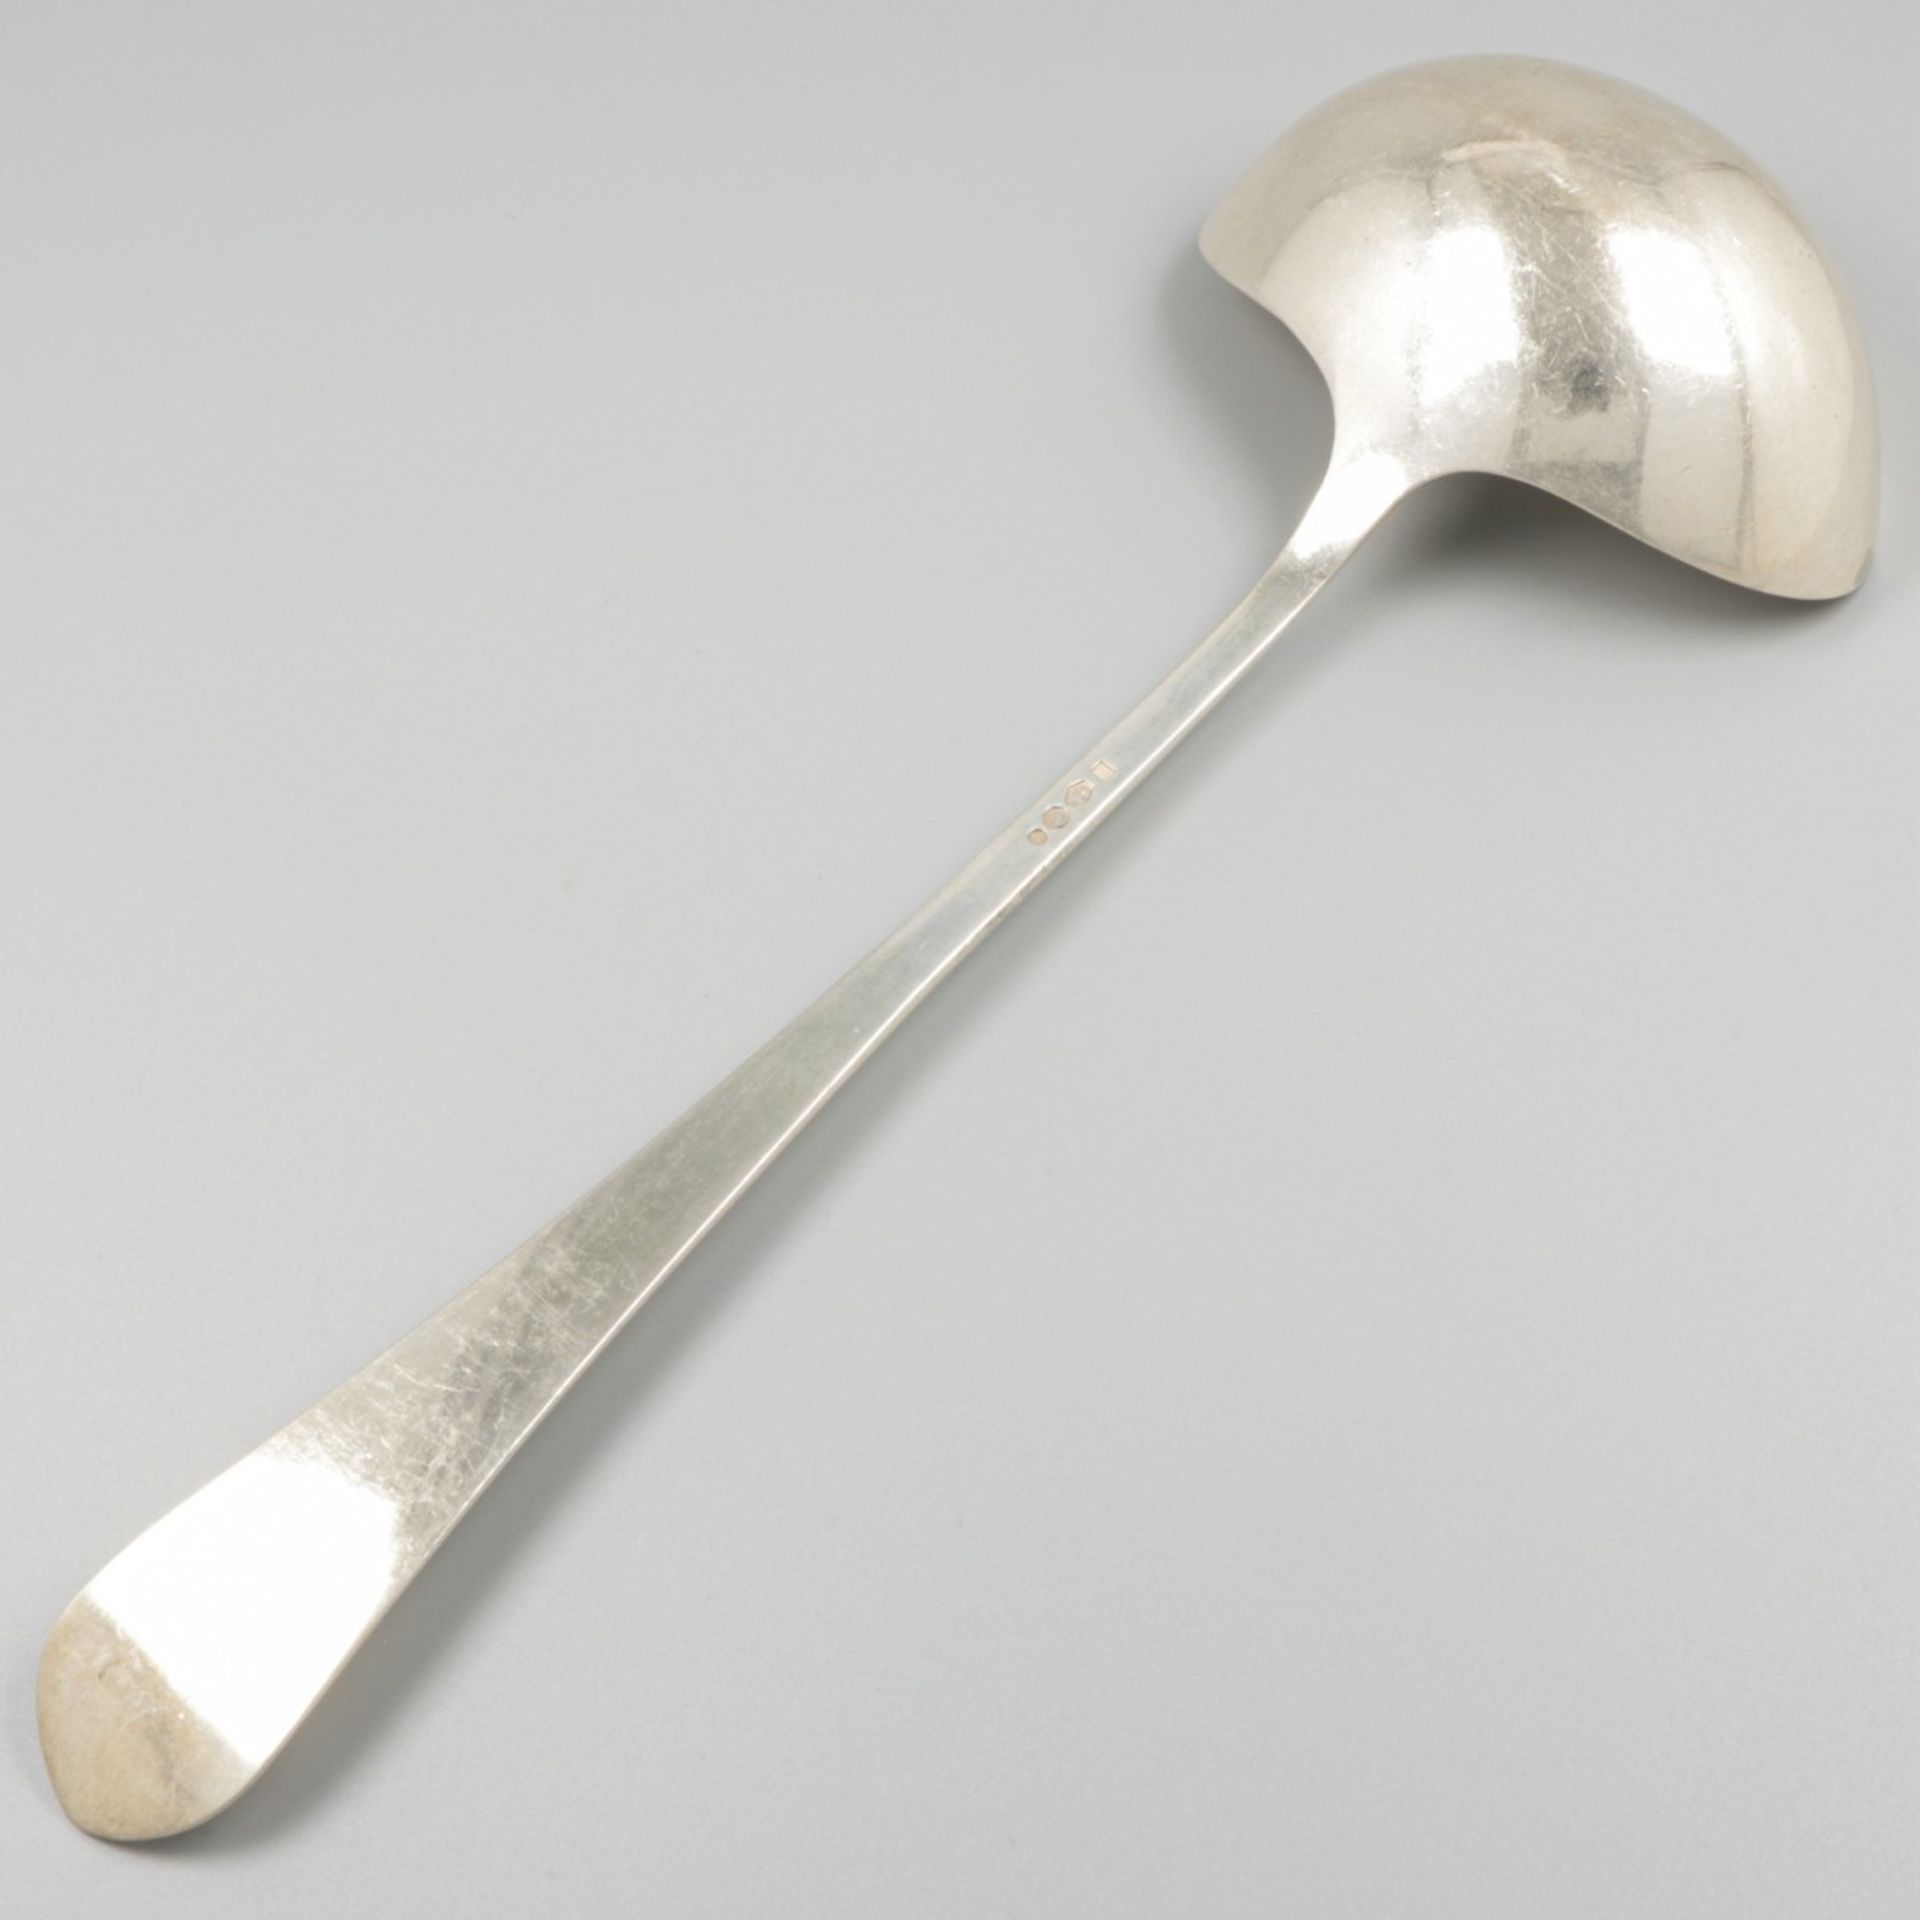 Souplouche / Soup spoon silver. - Image 2 of 5